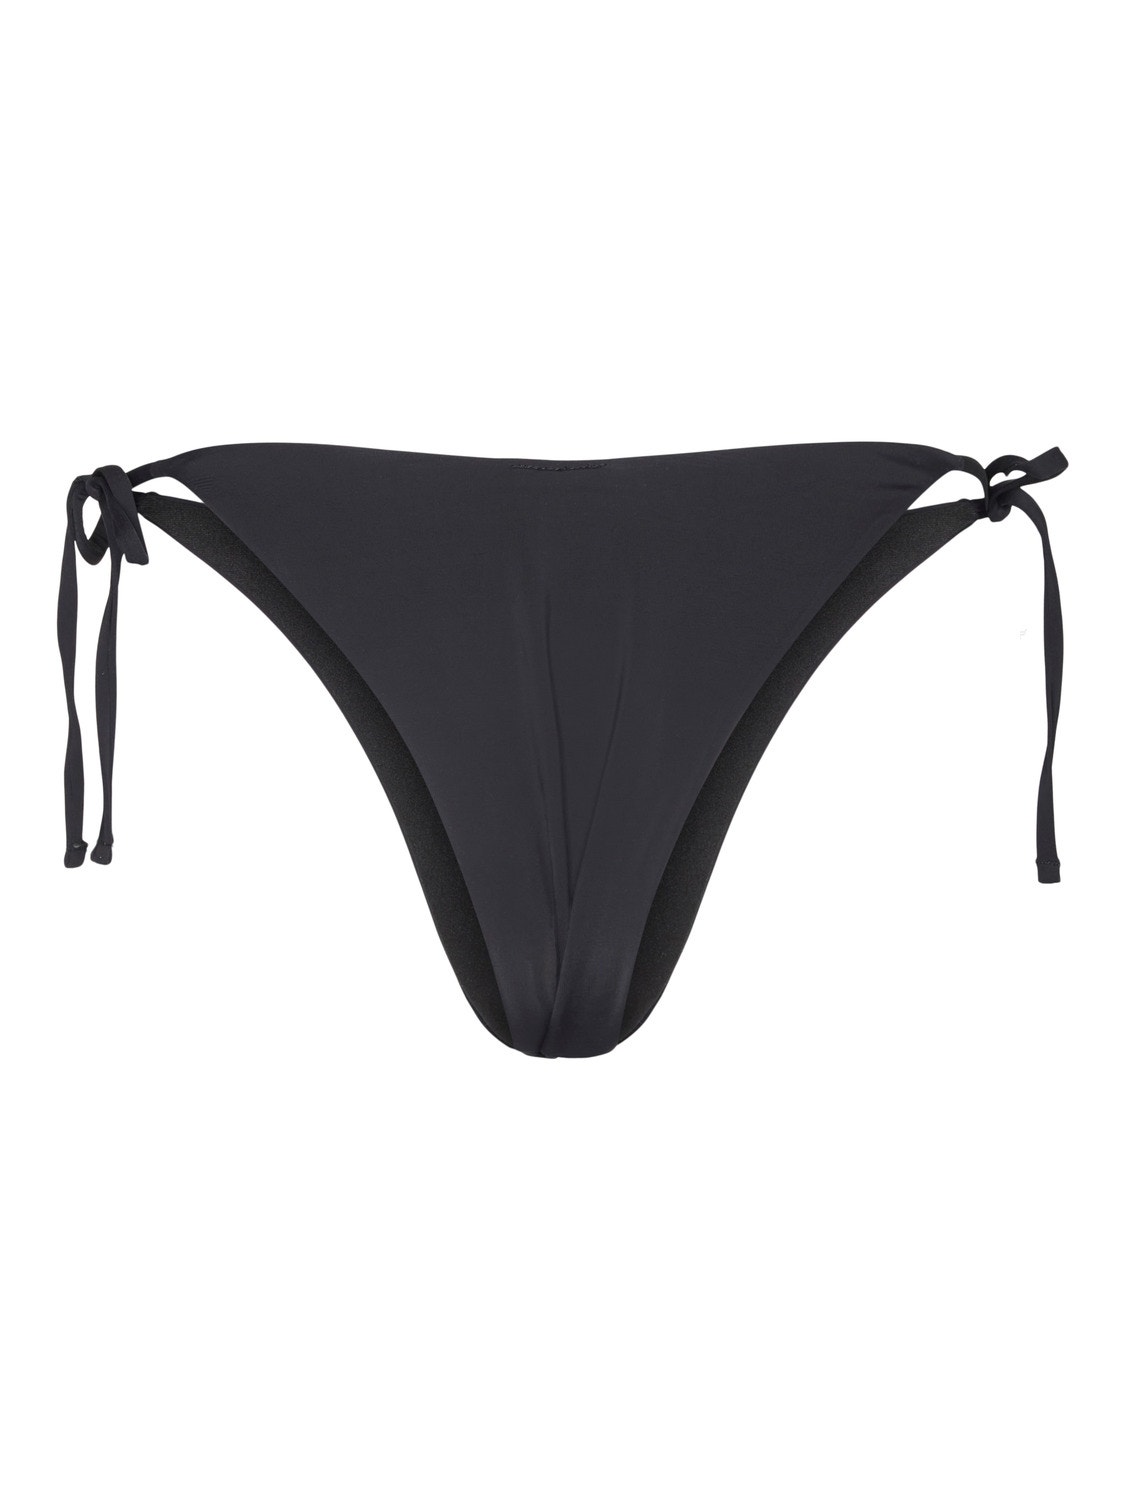 Vero Moda VMANJALI Swimwear -Black - 10282717